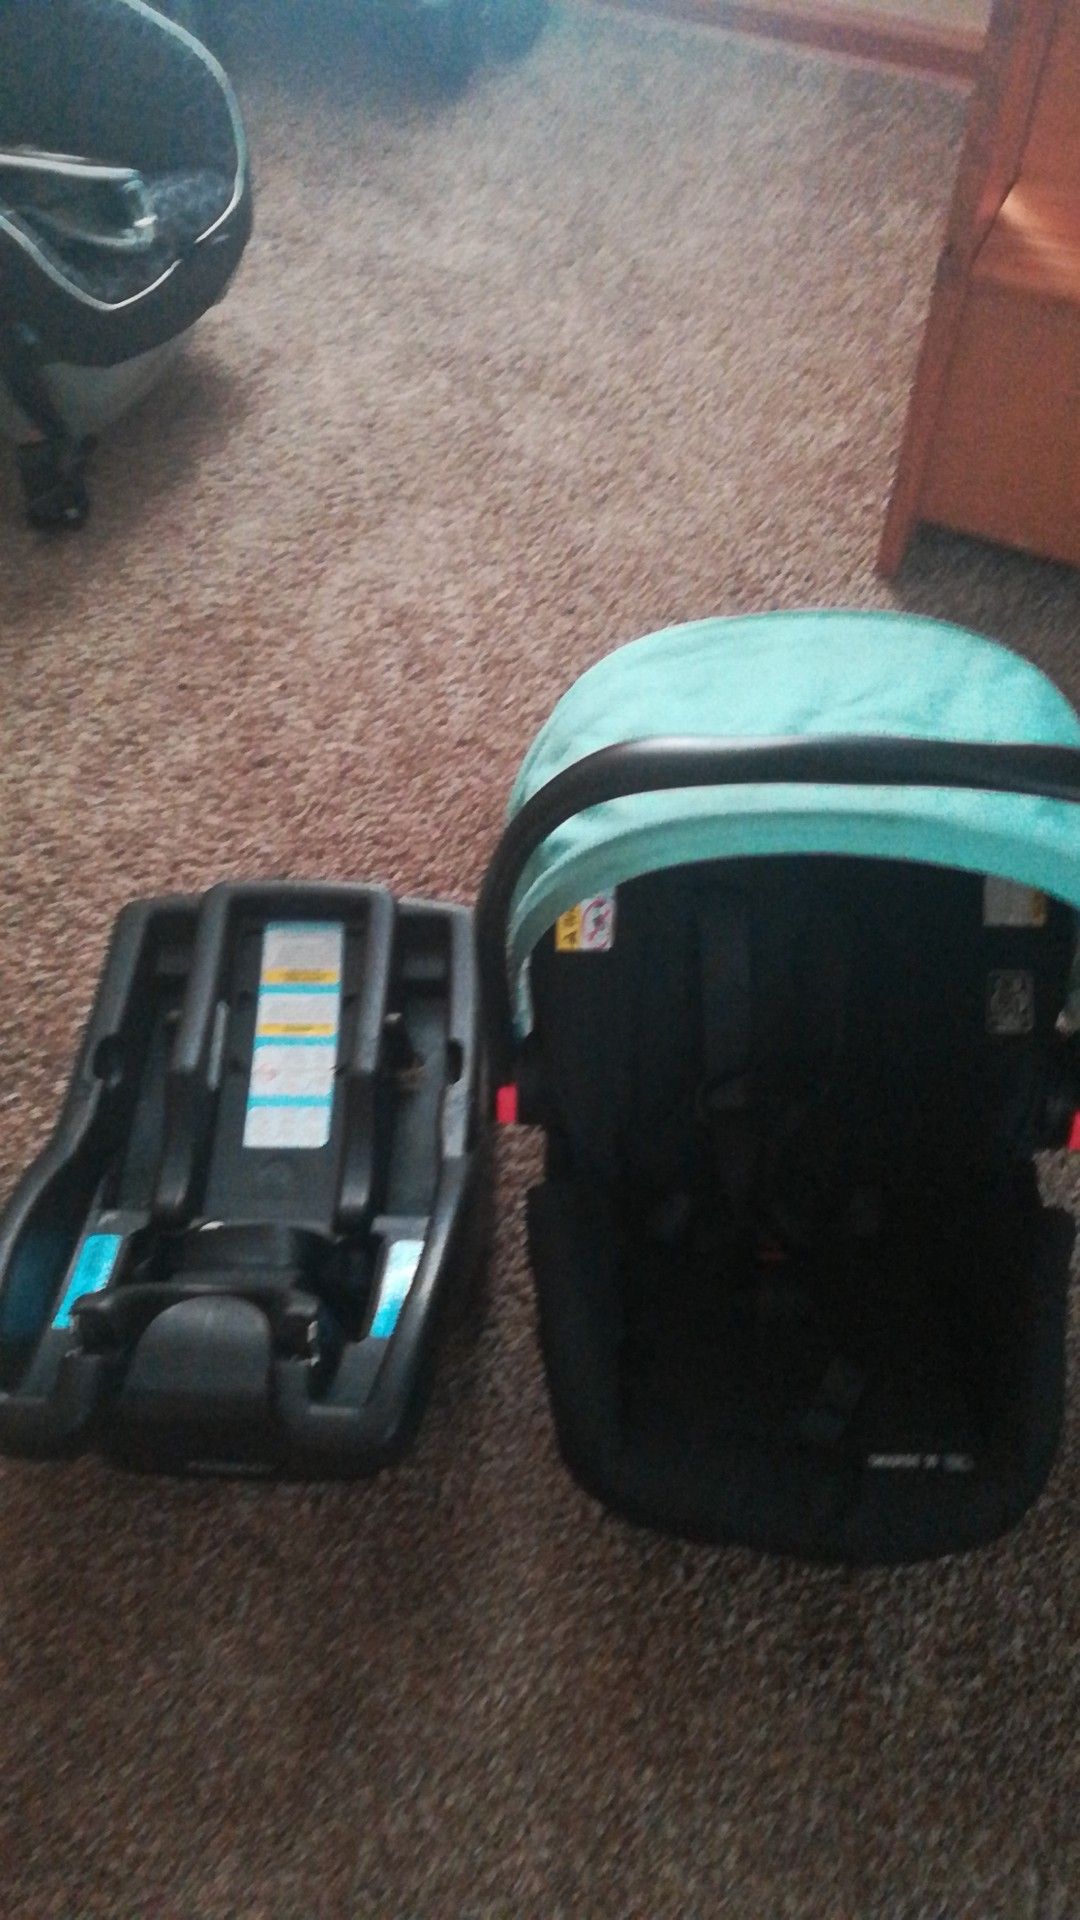 Infant Graco car seat